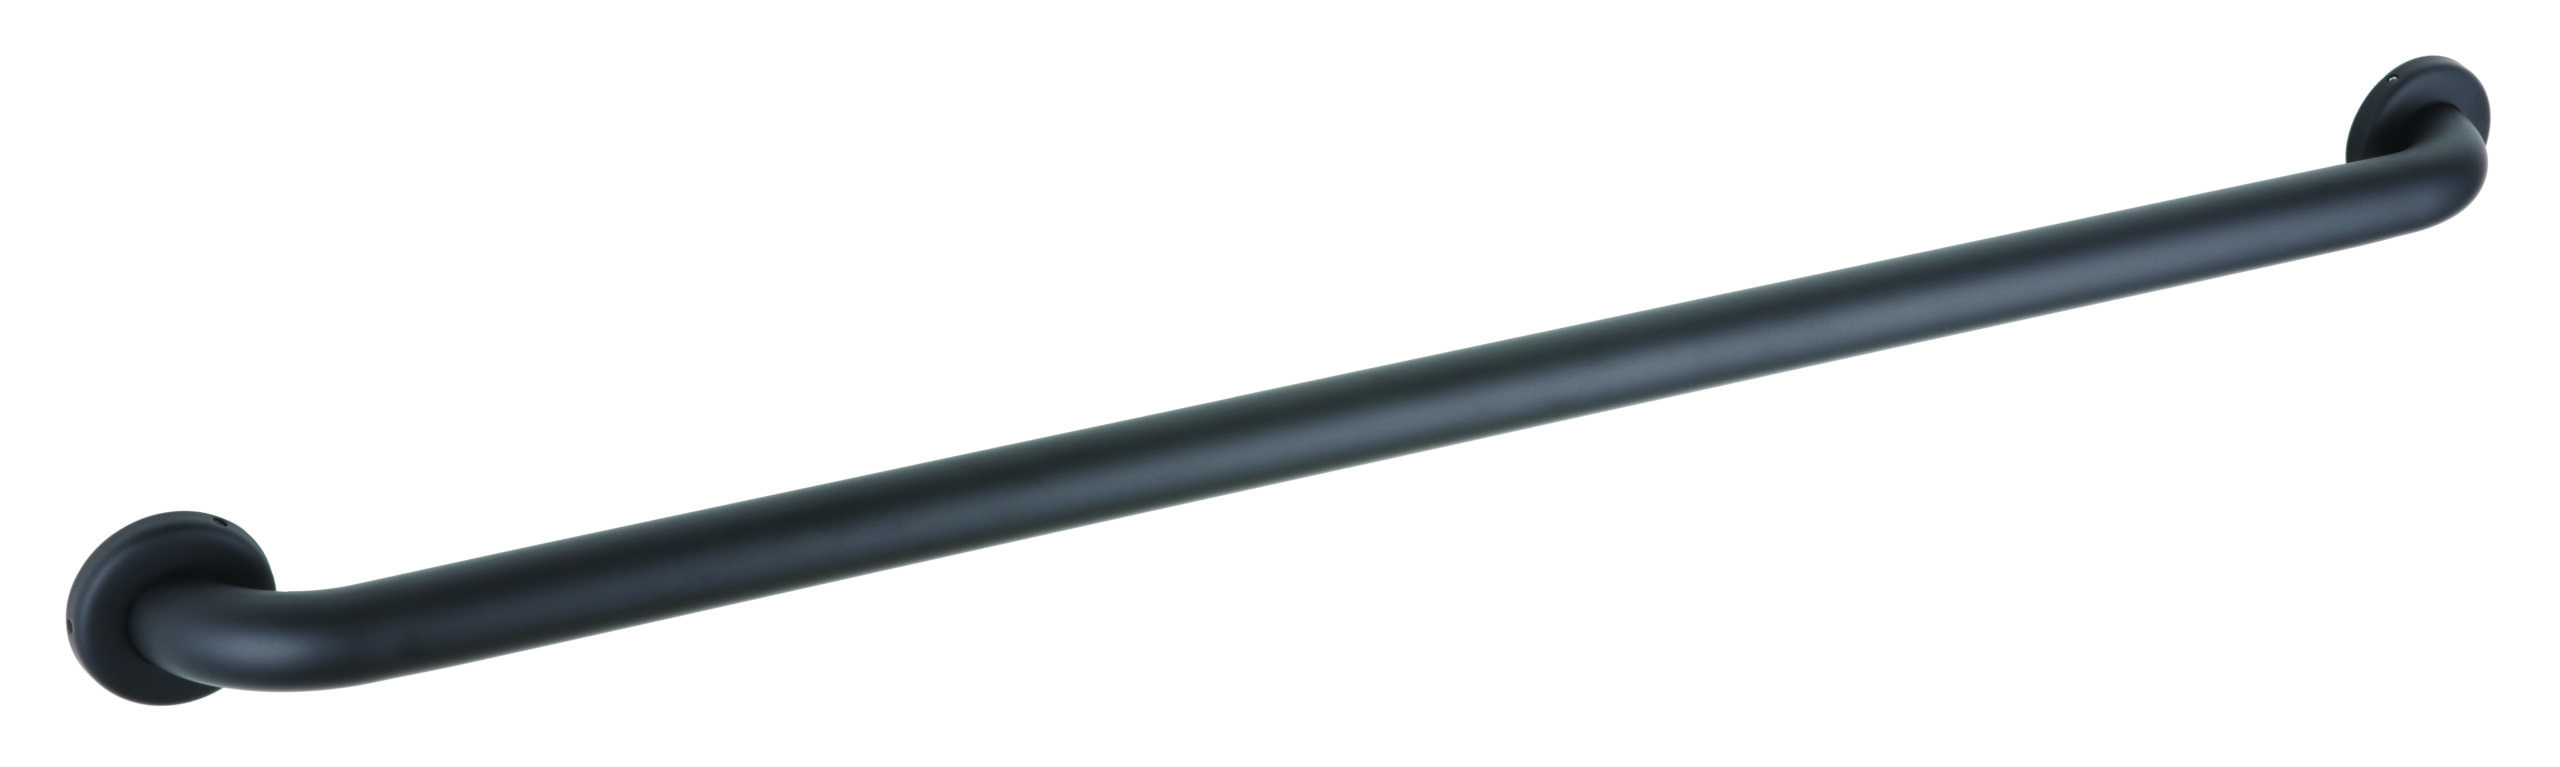 1.5 Inch Diameter Straight Grab Bar with Concealed Flange, Matte Black - (Model #: 150c.mblk-series-concealed) main image